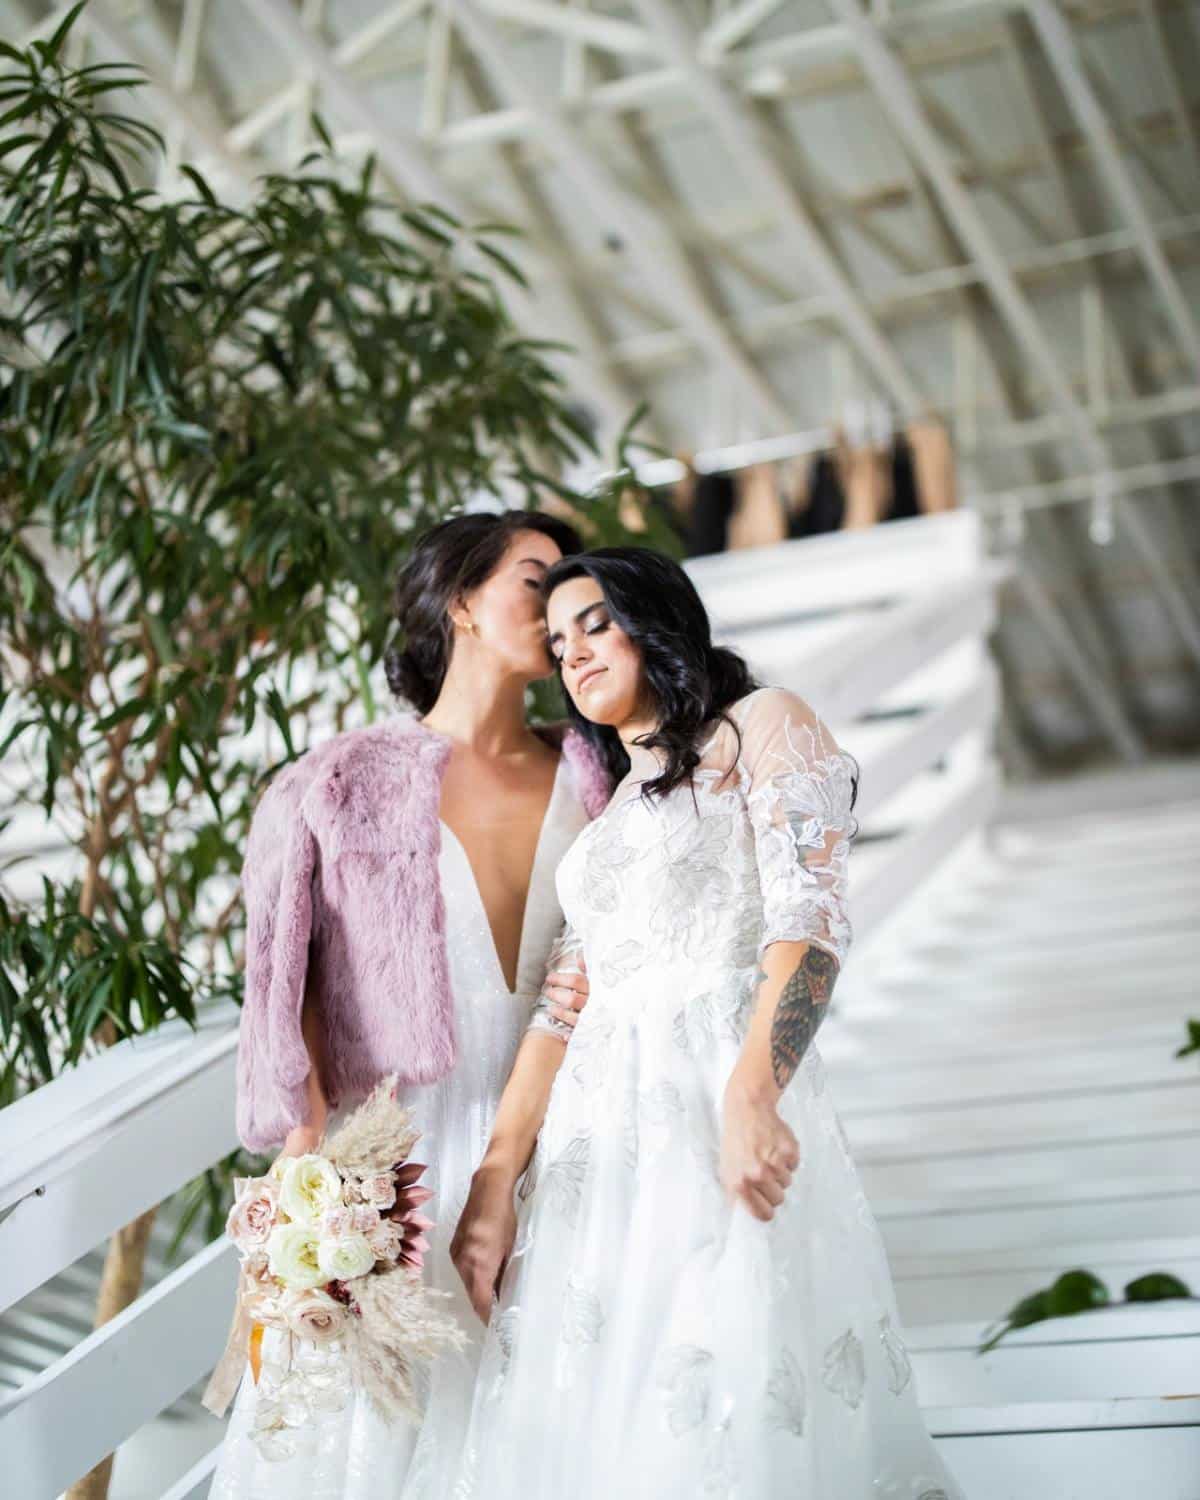 Marriage photo of two women in wedding dress